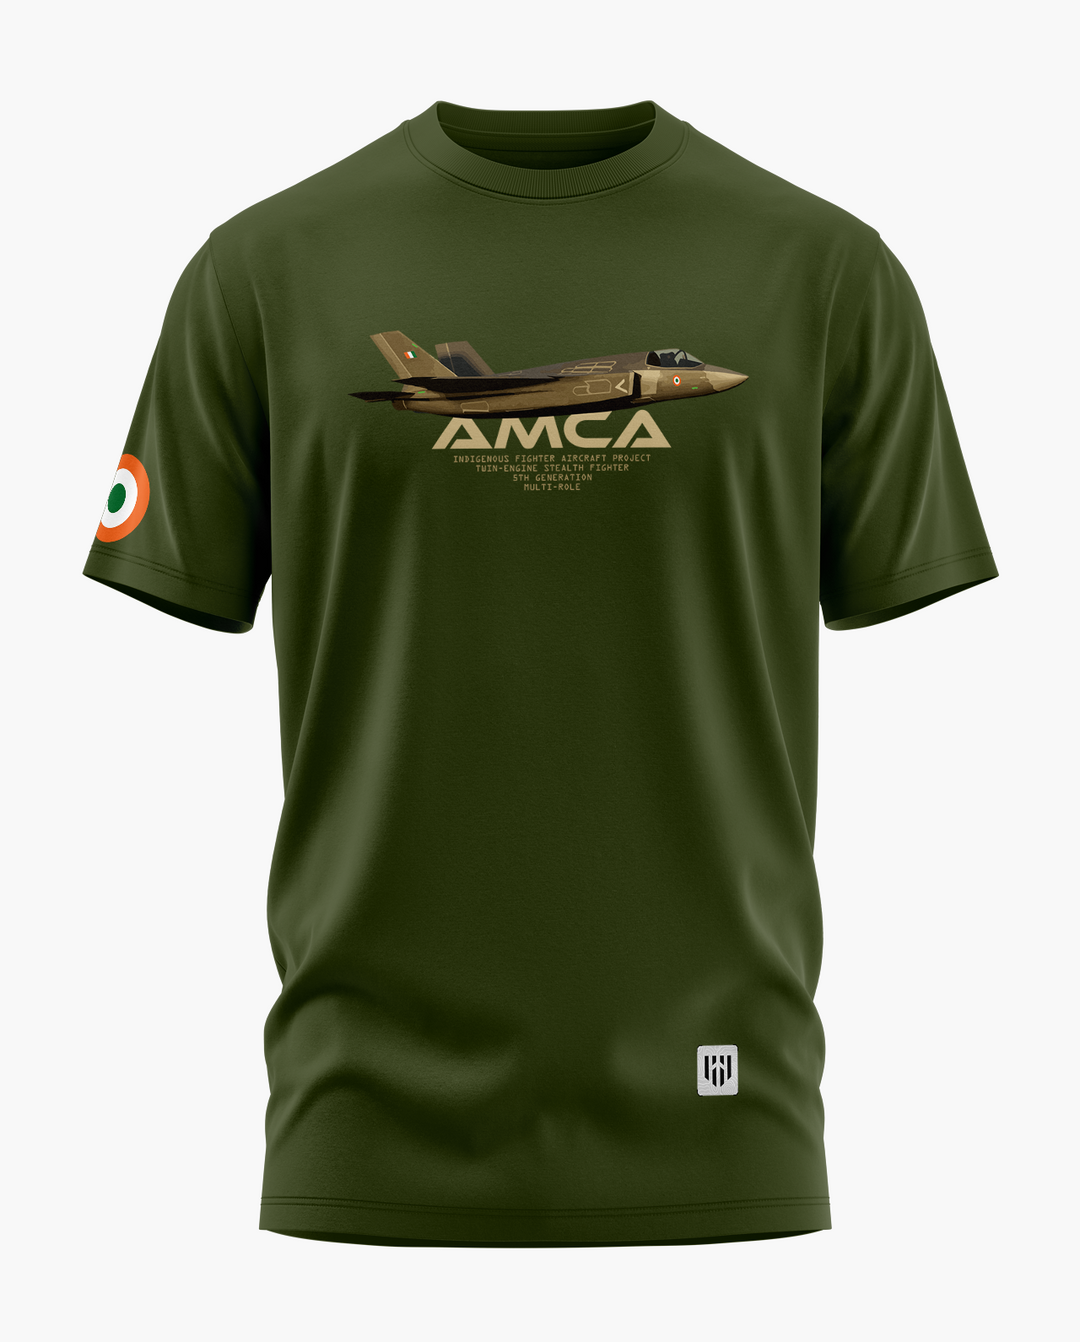 THE AMCA CONCEPT AIRCRAFT T-Shirt